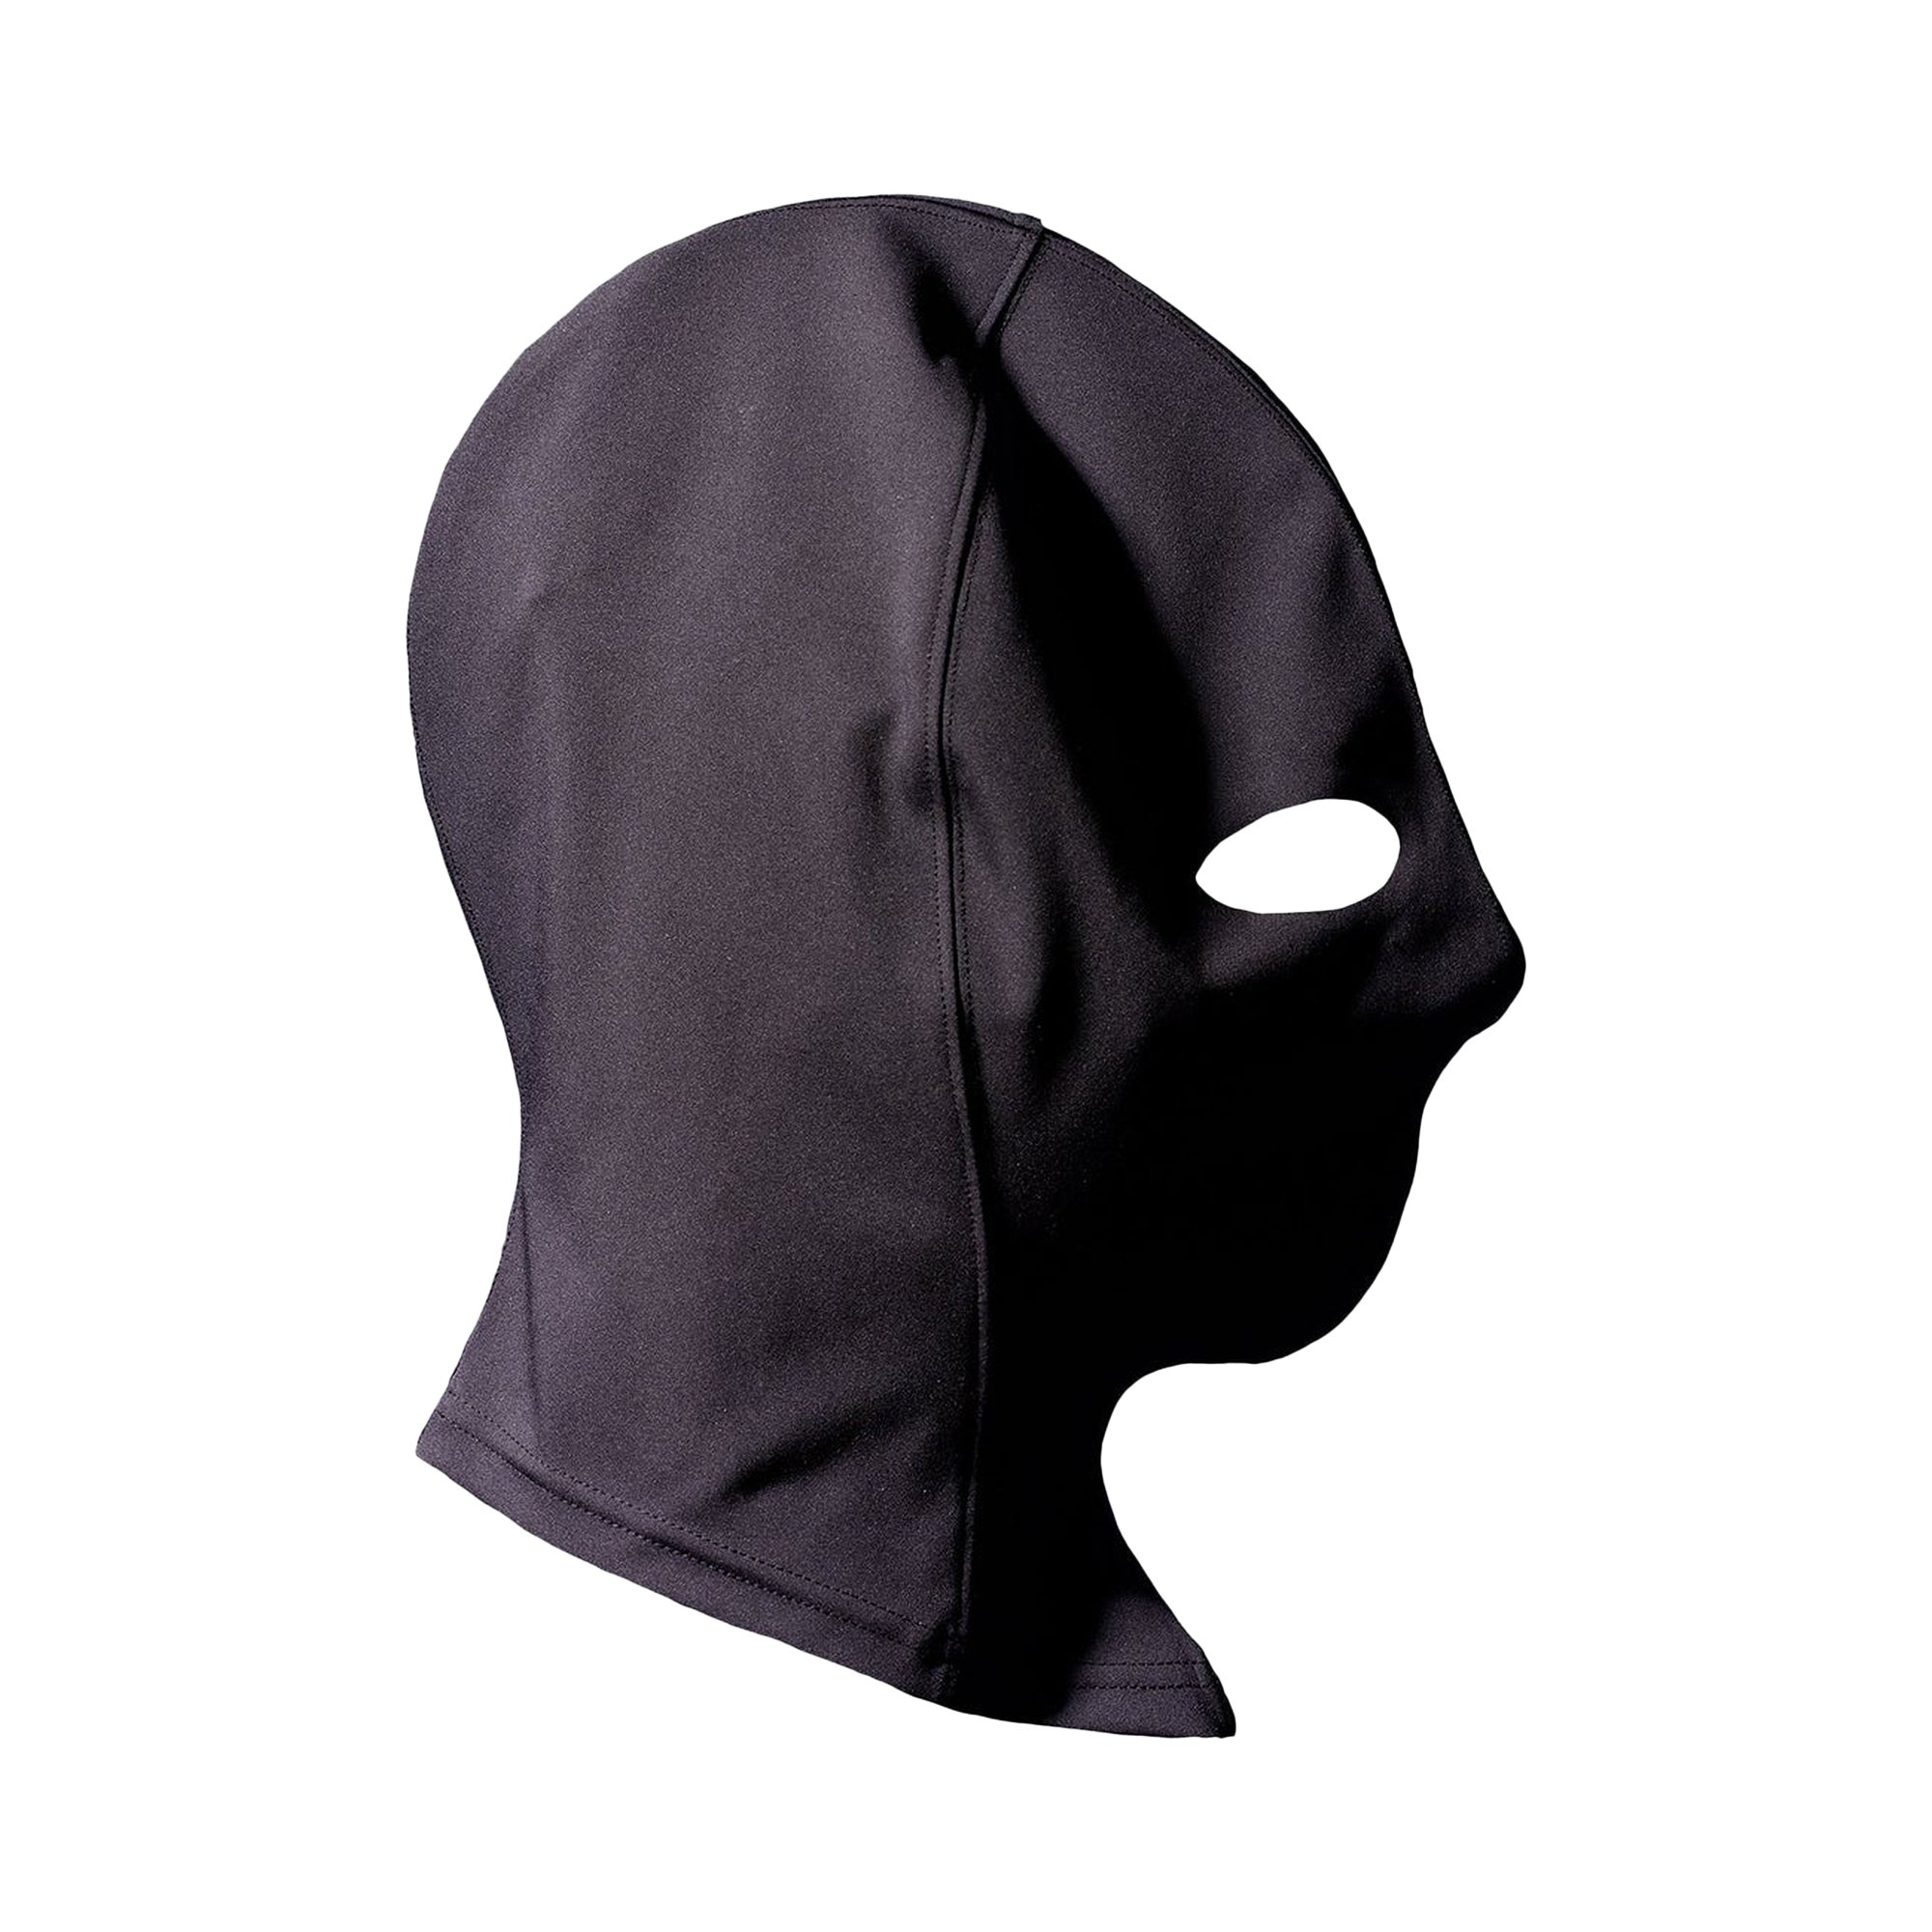 Yeezy Gap Engineered by Balenciaga Facemask 'Black'